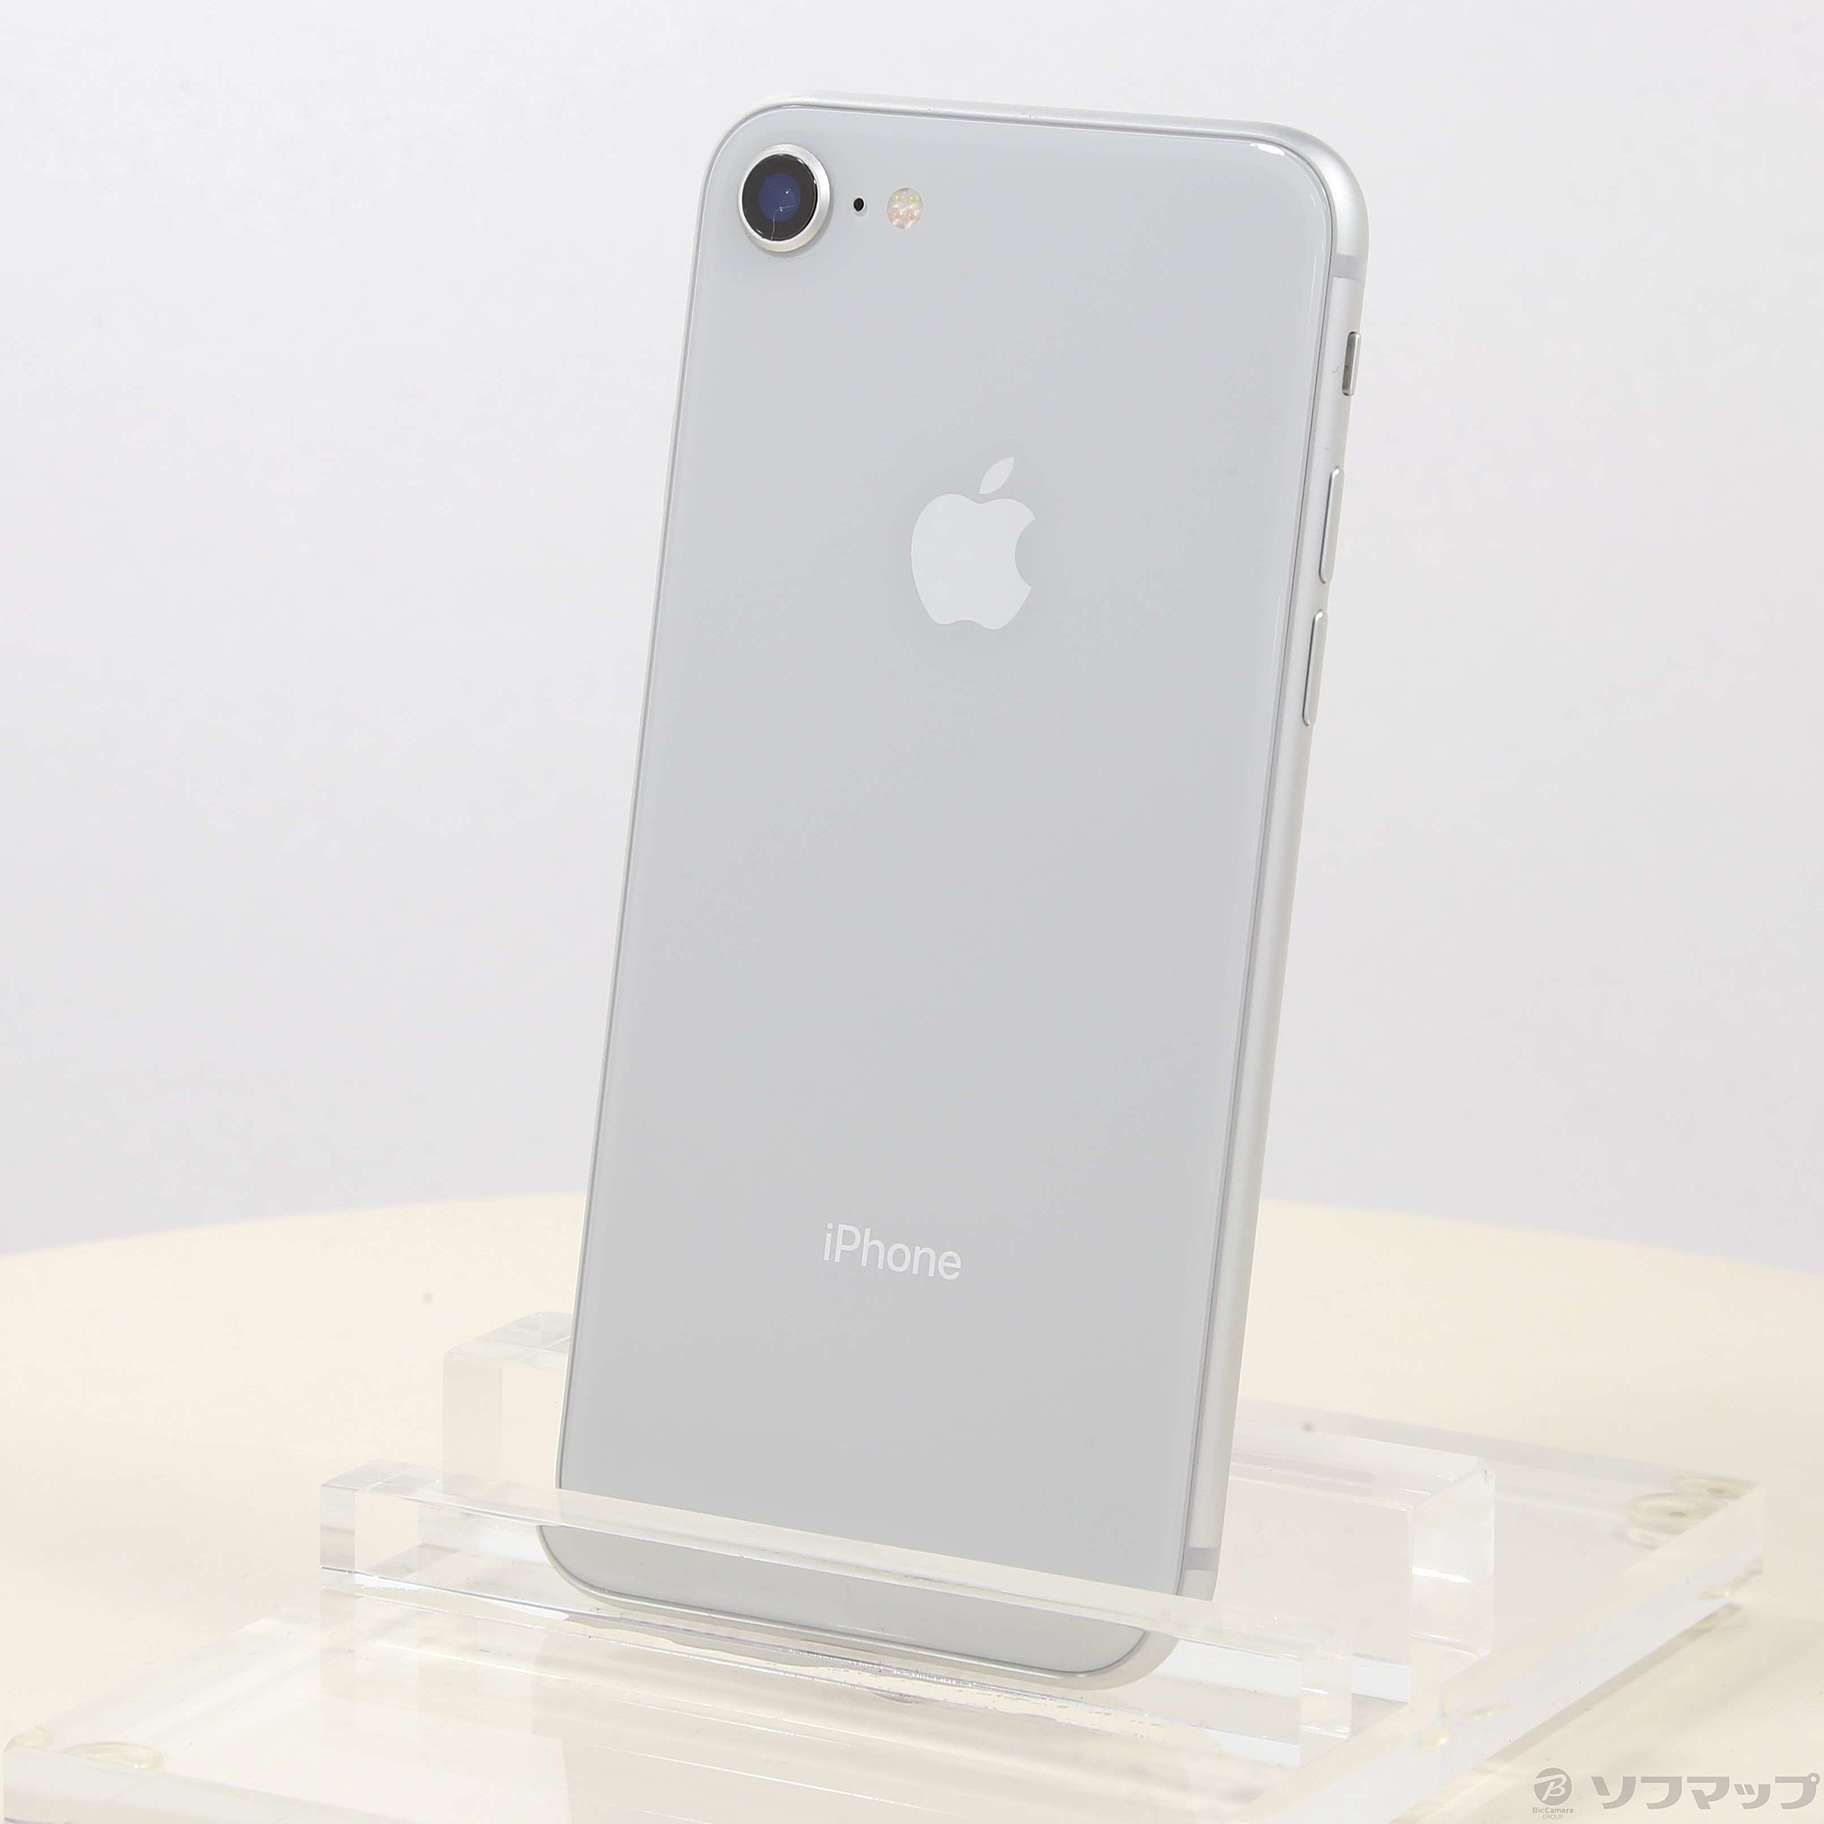 iPhone8 Silver 256GB